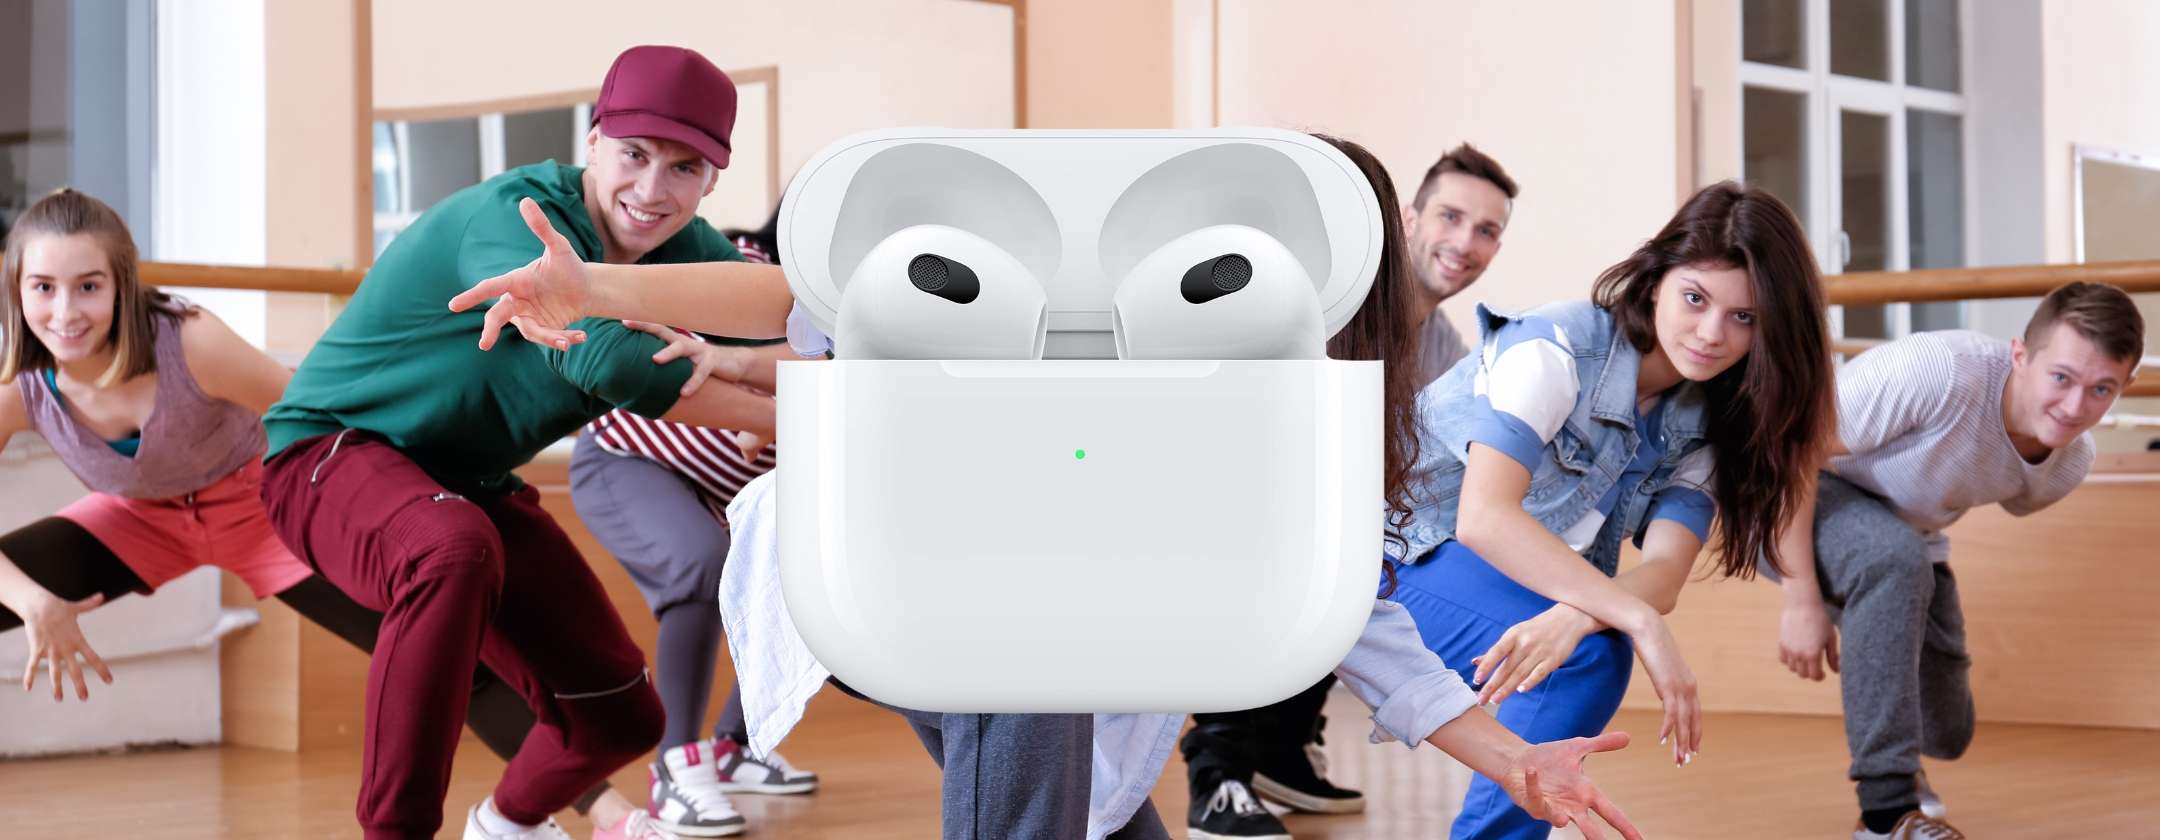 Apple AirPods 3 MagSafe a soli 180€: OFFERTA lampo su